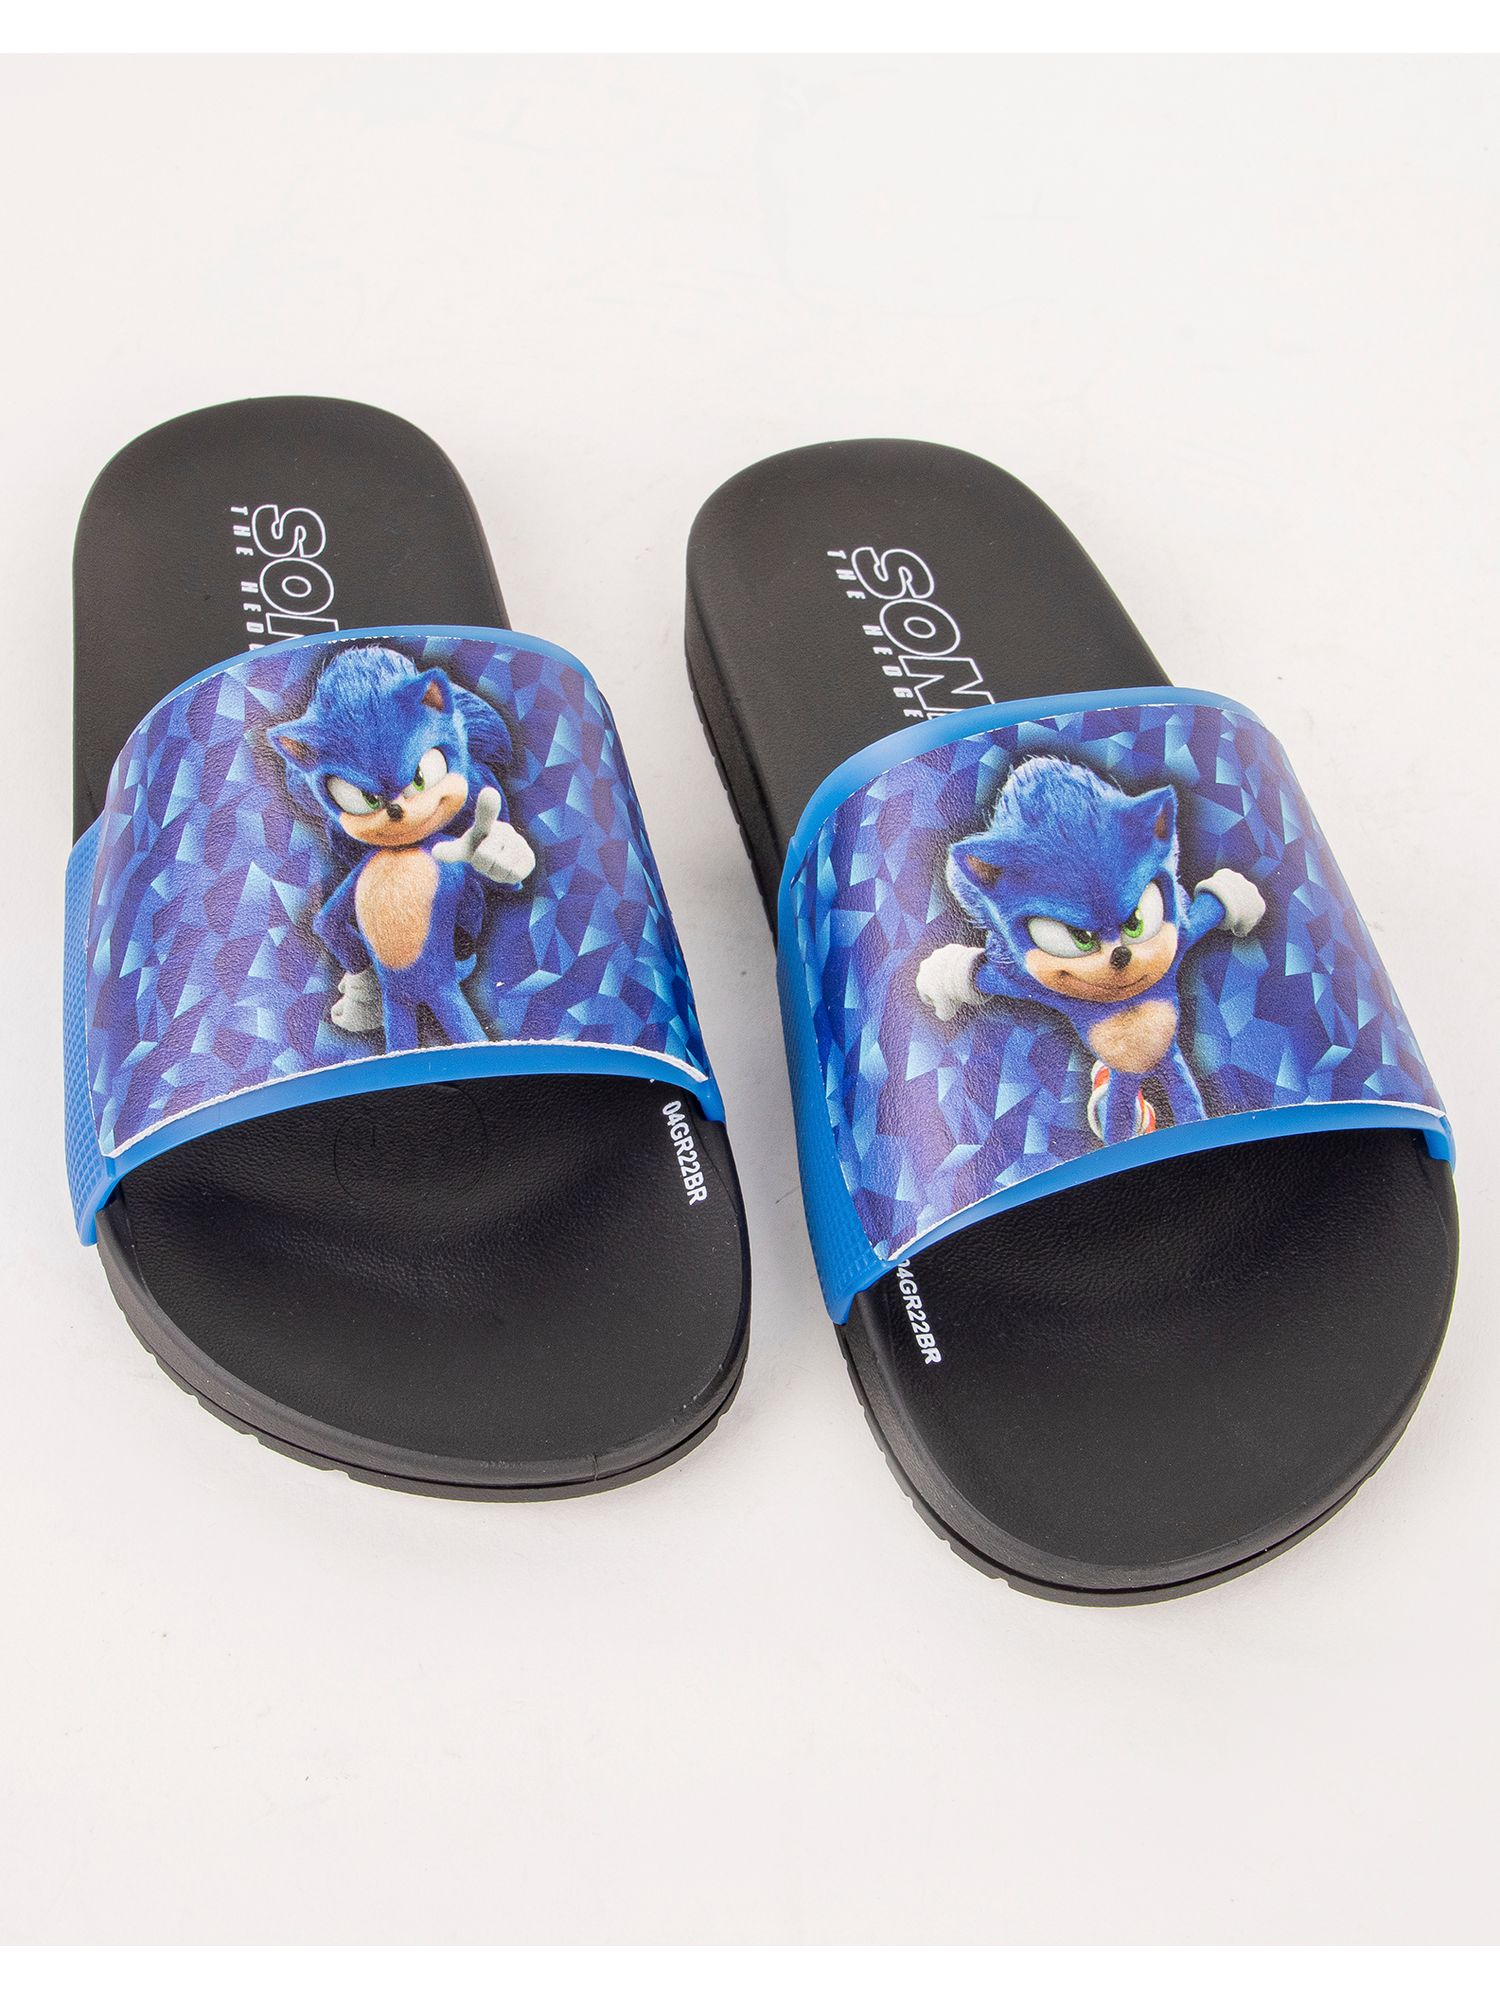 Slideshow: Sonic 2 - Imagens